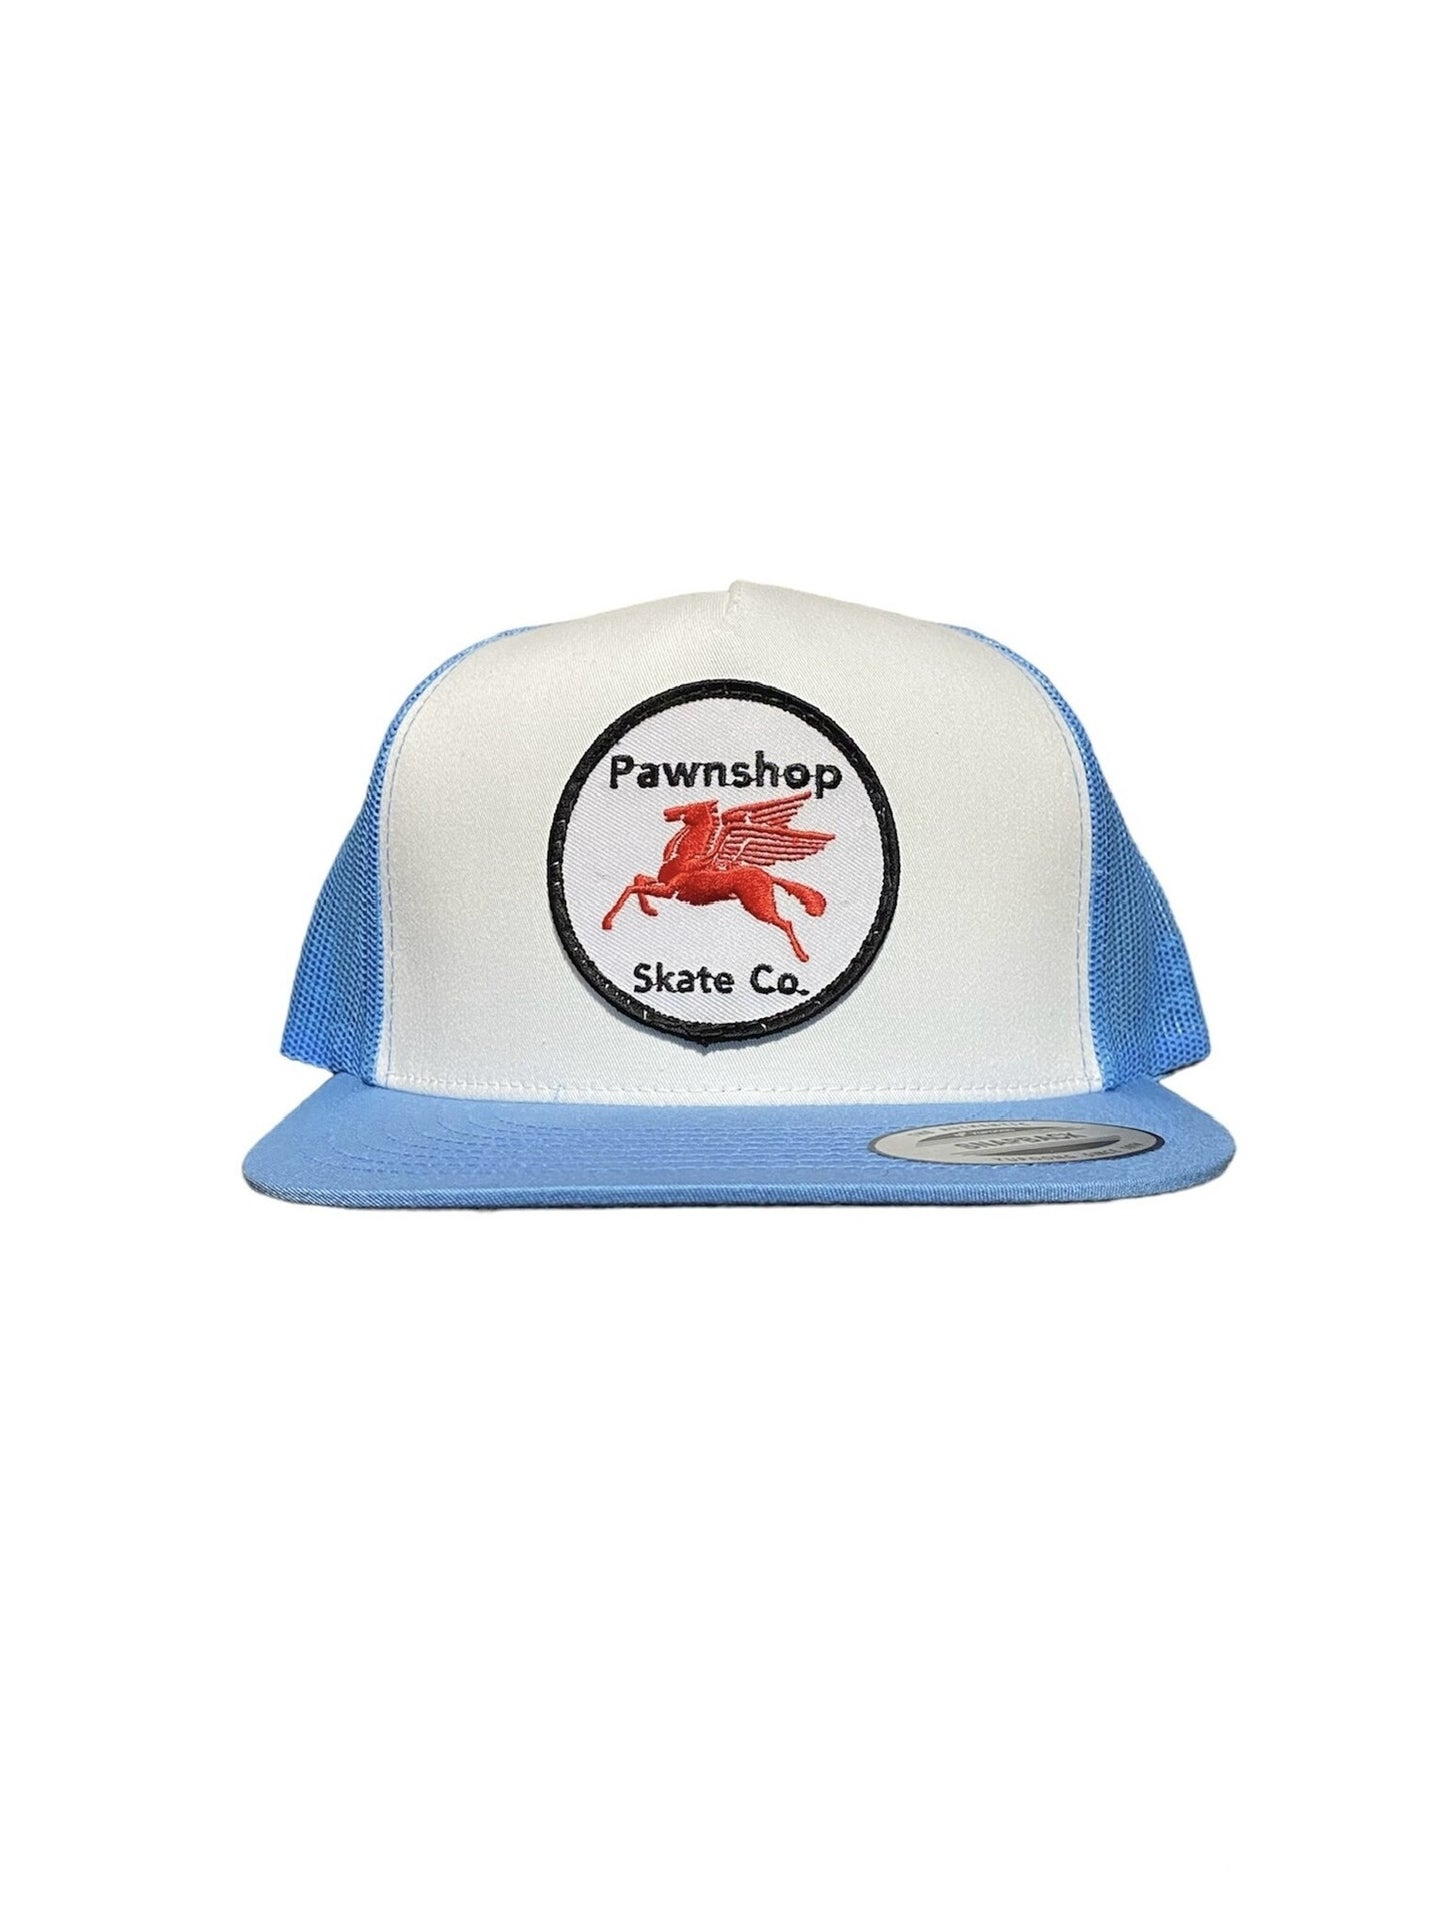 Pawnshop trucker SnapBack hat Pegasus baby blue/white